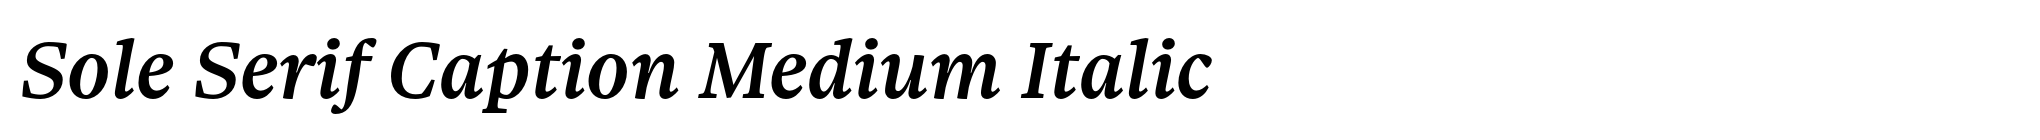 Sole Serif Caption Medium Italic image